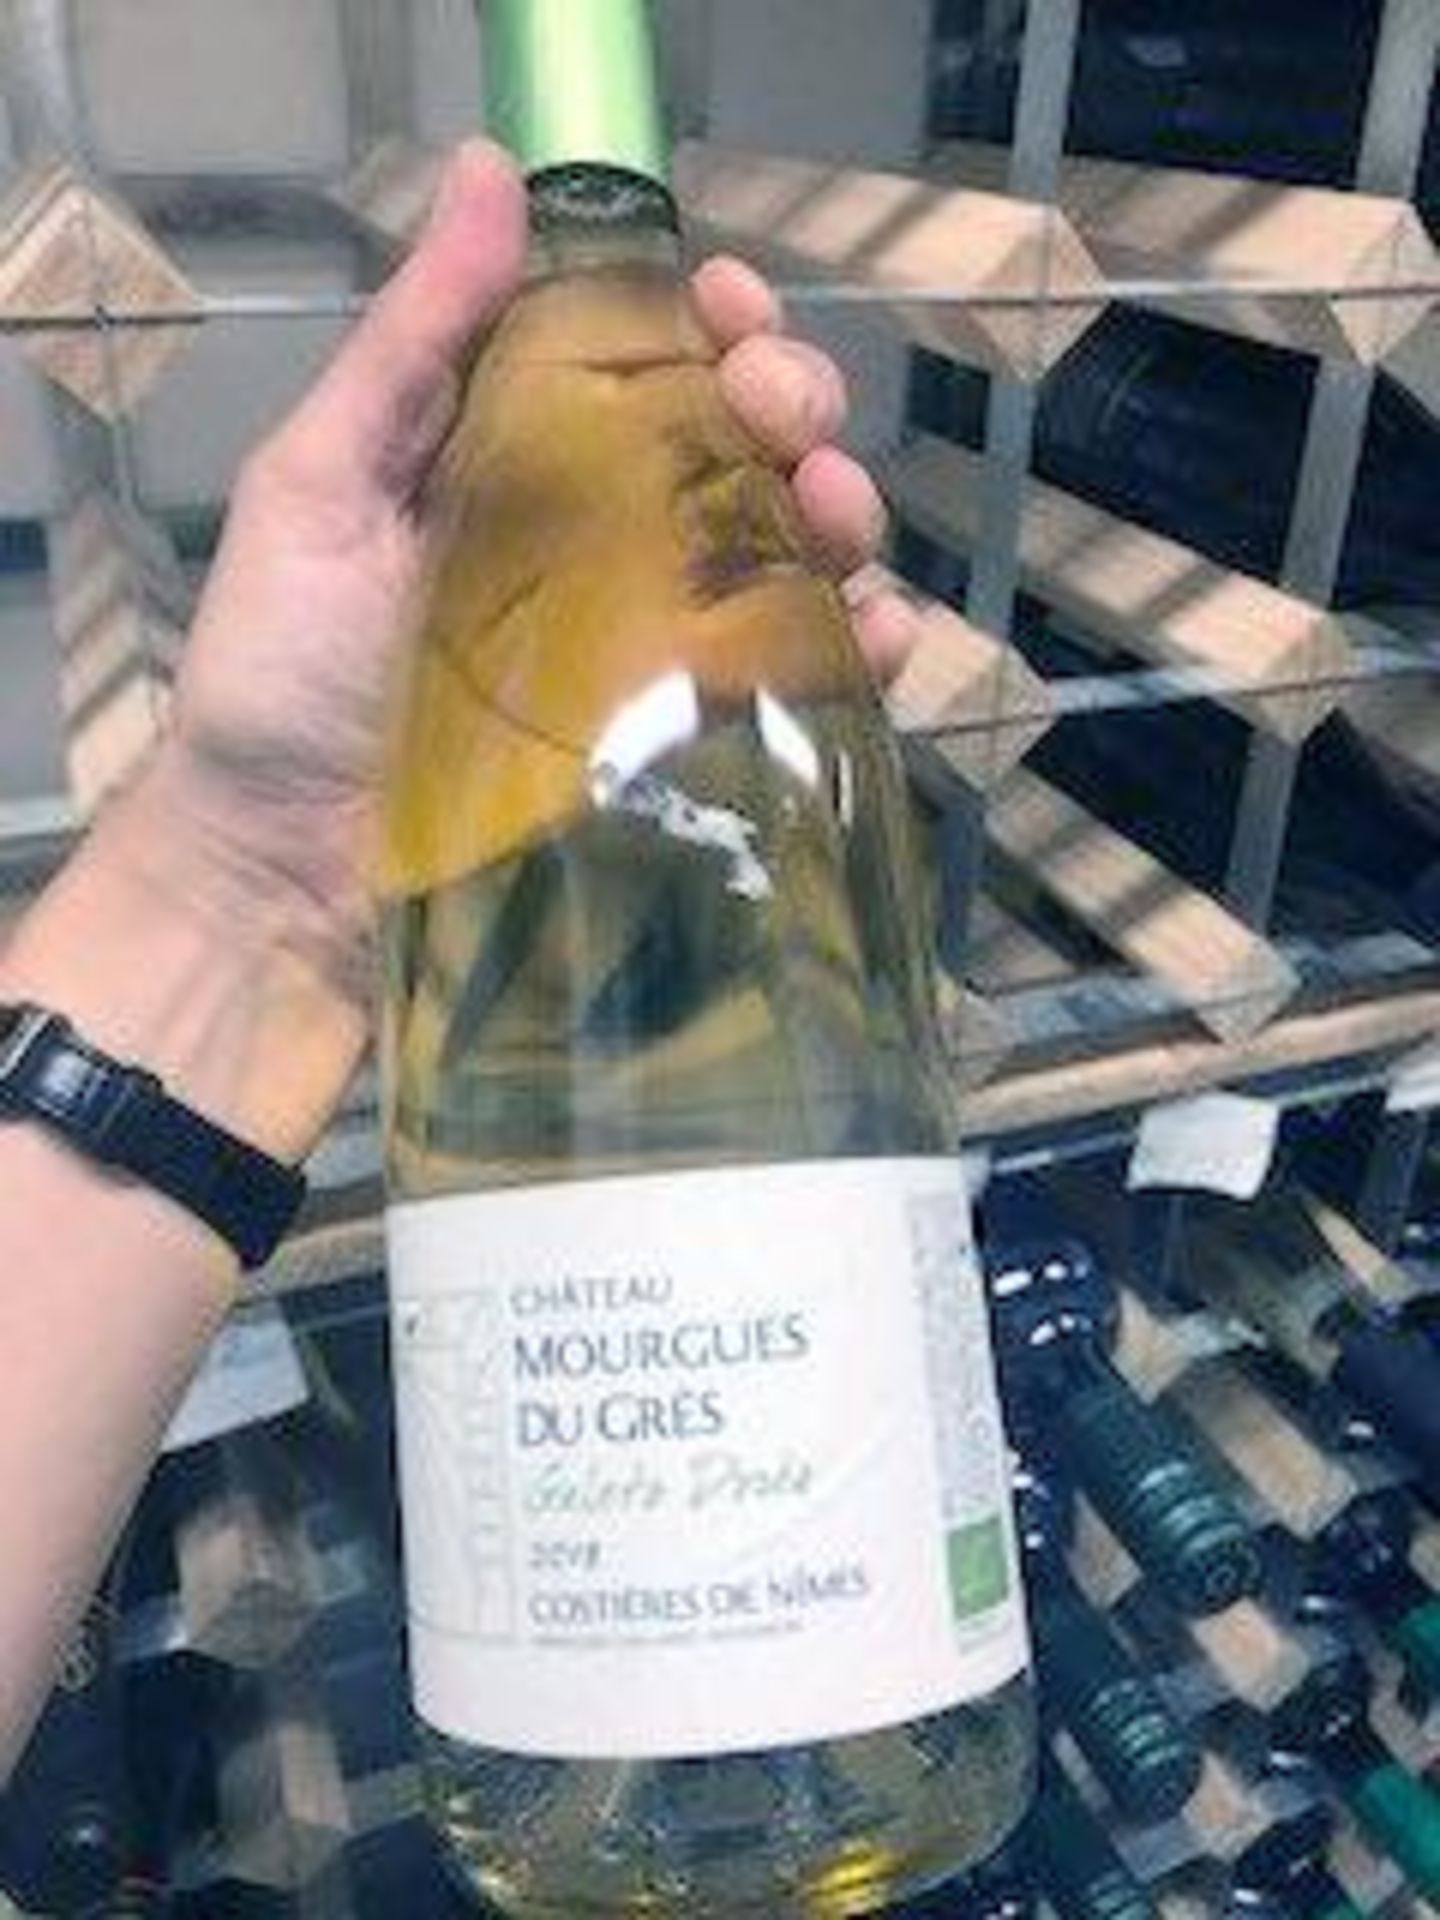 White Wine --Costieres De Nimes Blanc Galets Dores 2018 1 X Bottle Bin Number (2208)